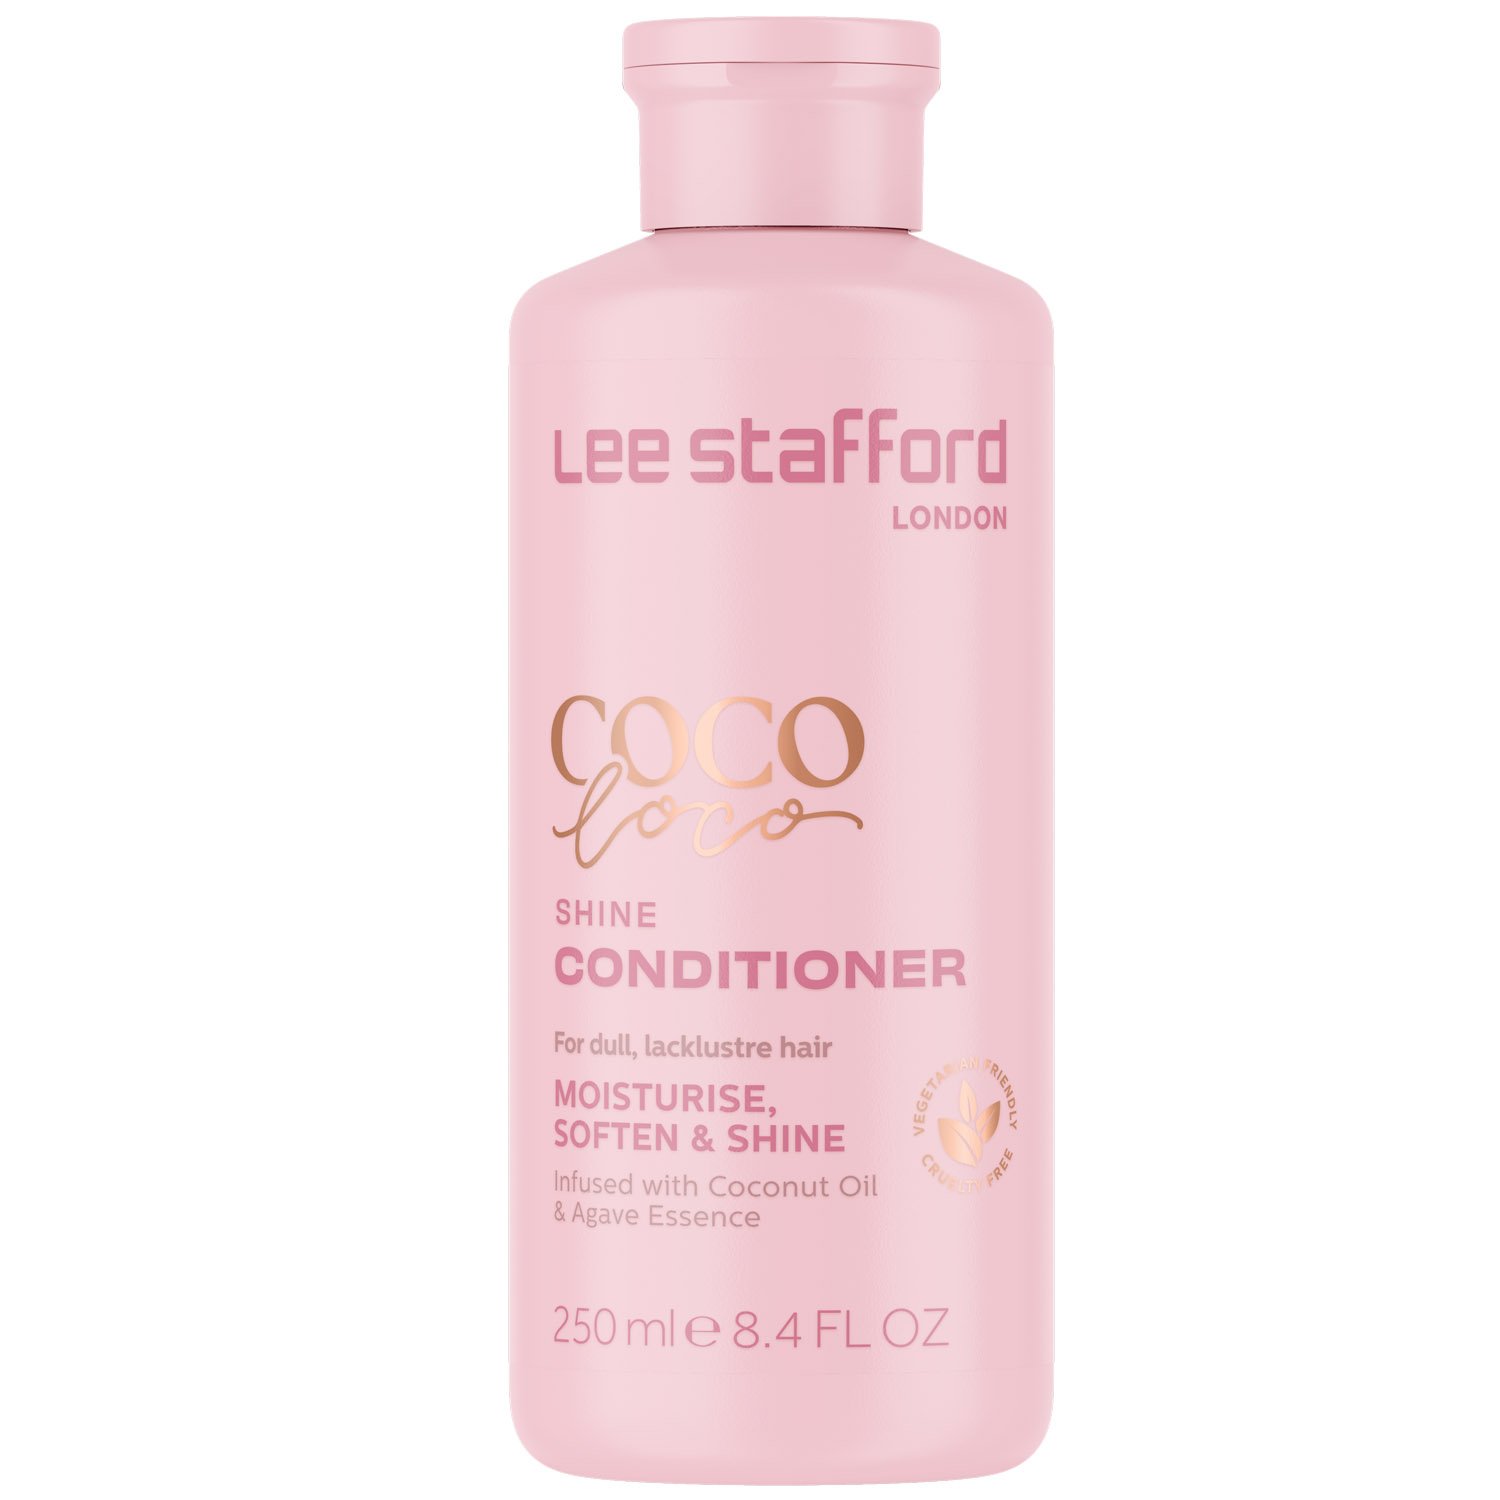 Кондиционер для волос Lee Stafford Сосо Loco Shine Conditioner 250 мл - фото 1